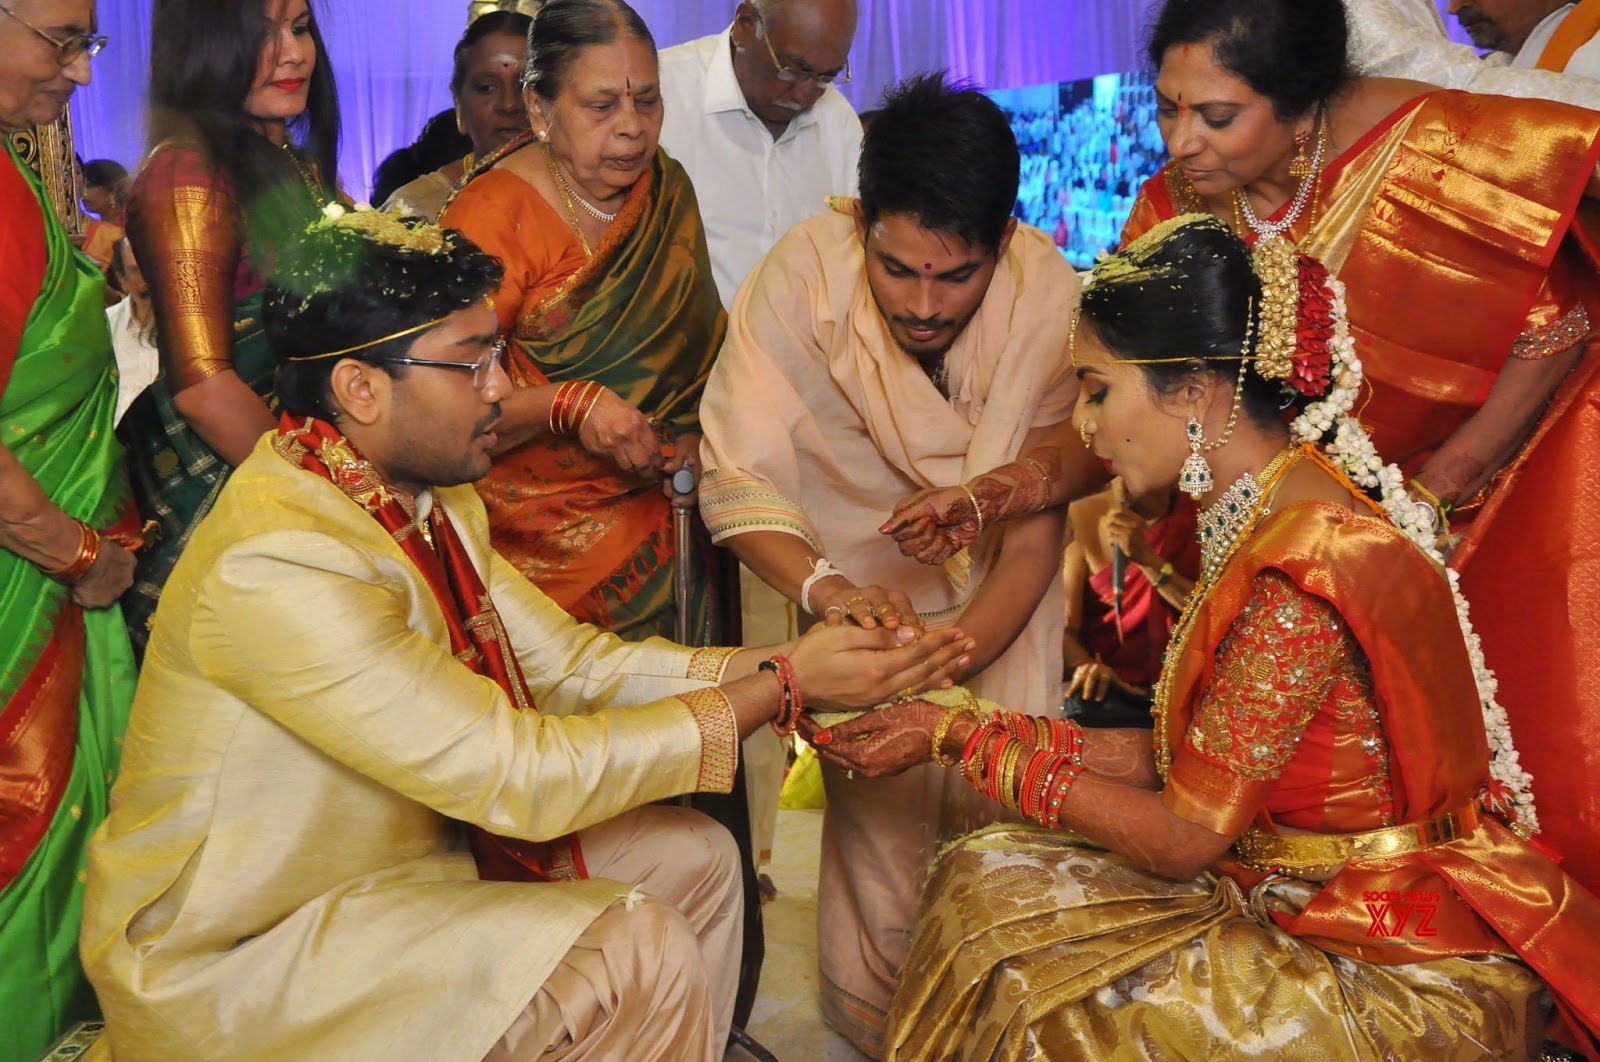 Producer Ram Mohana Rao S Daughter Dedeepya Vishnu Charan Wedding Indian Celebrity Events This video made exclusive for youtube viewers by shruti.tv. vishnu charan wedding